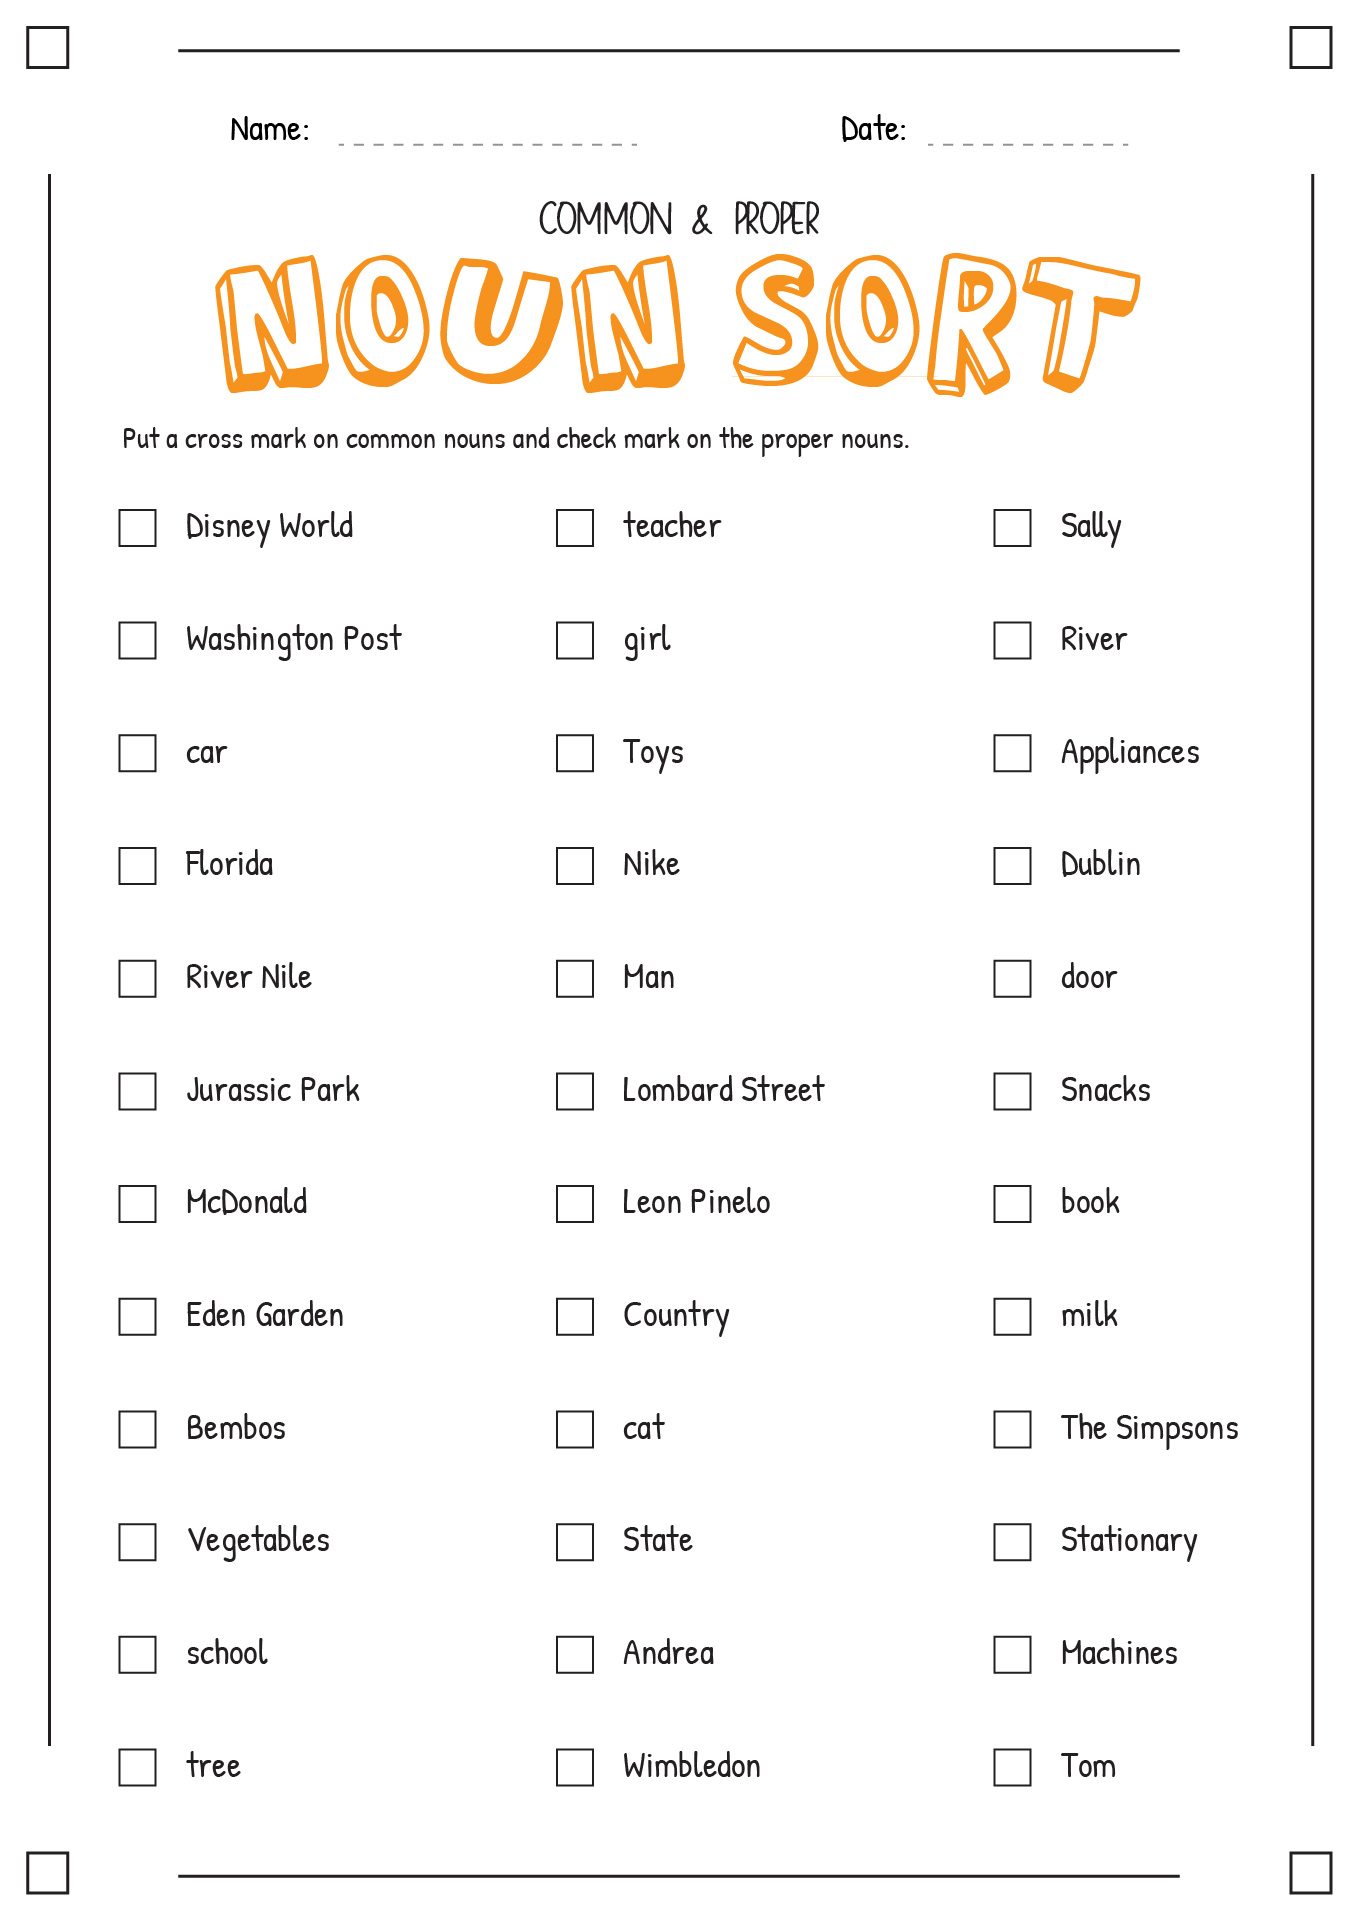 Common and Proper Noun Sort Worksheet